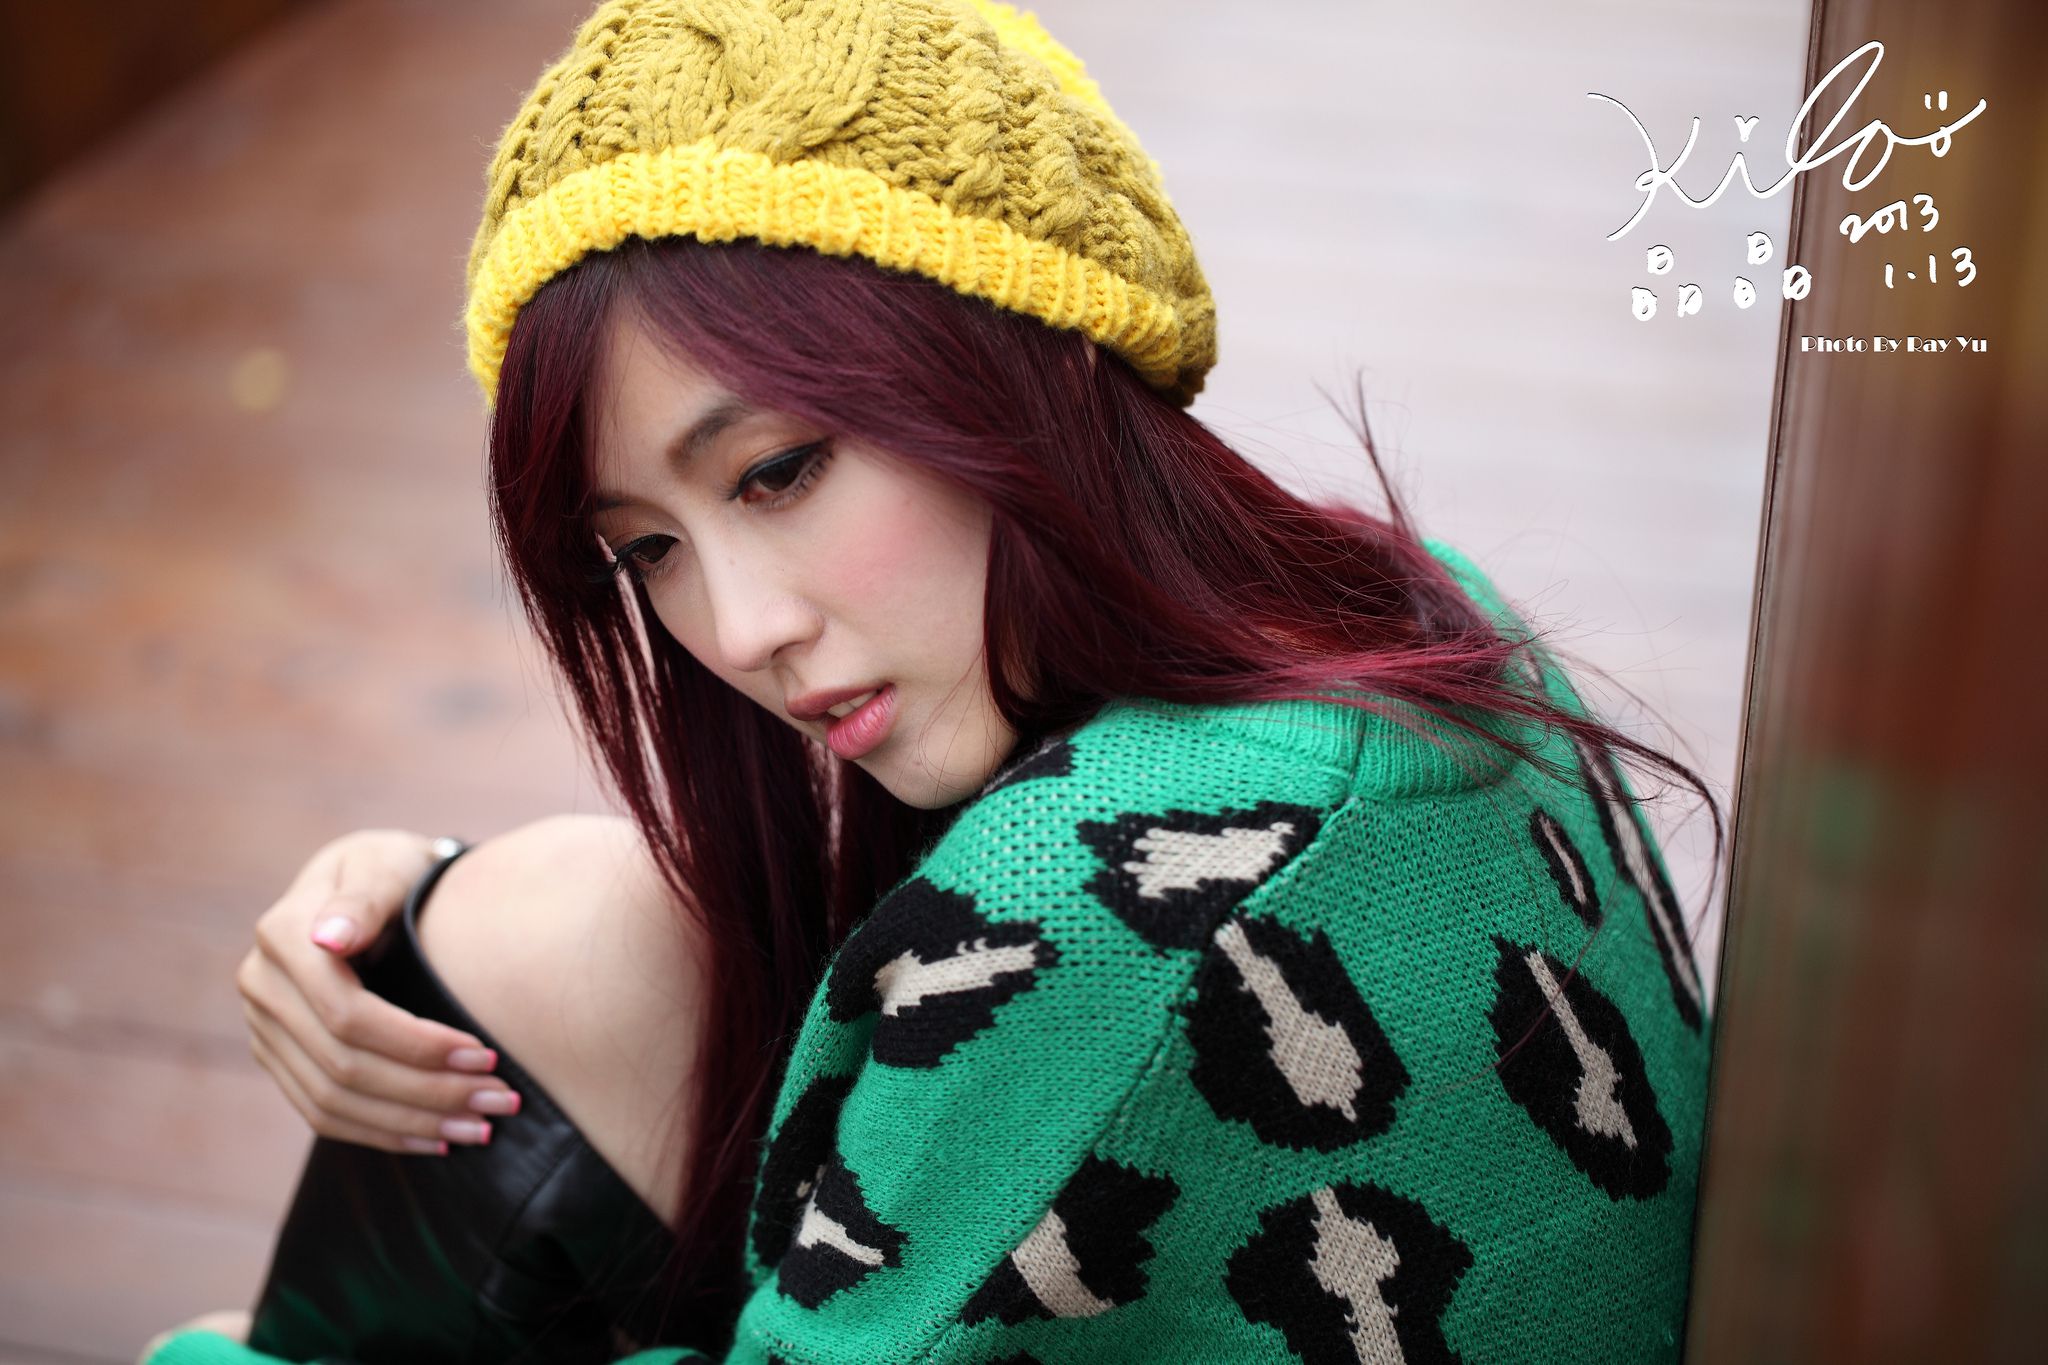 Taiwan model Liao Qiqi / KILA Crystal “Green Coat + Boots” Street Beat Photo